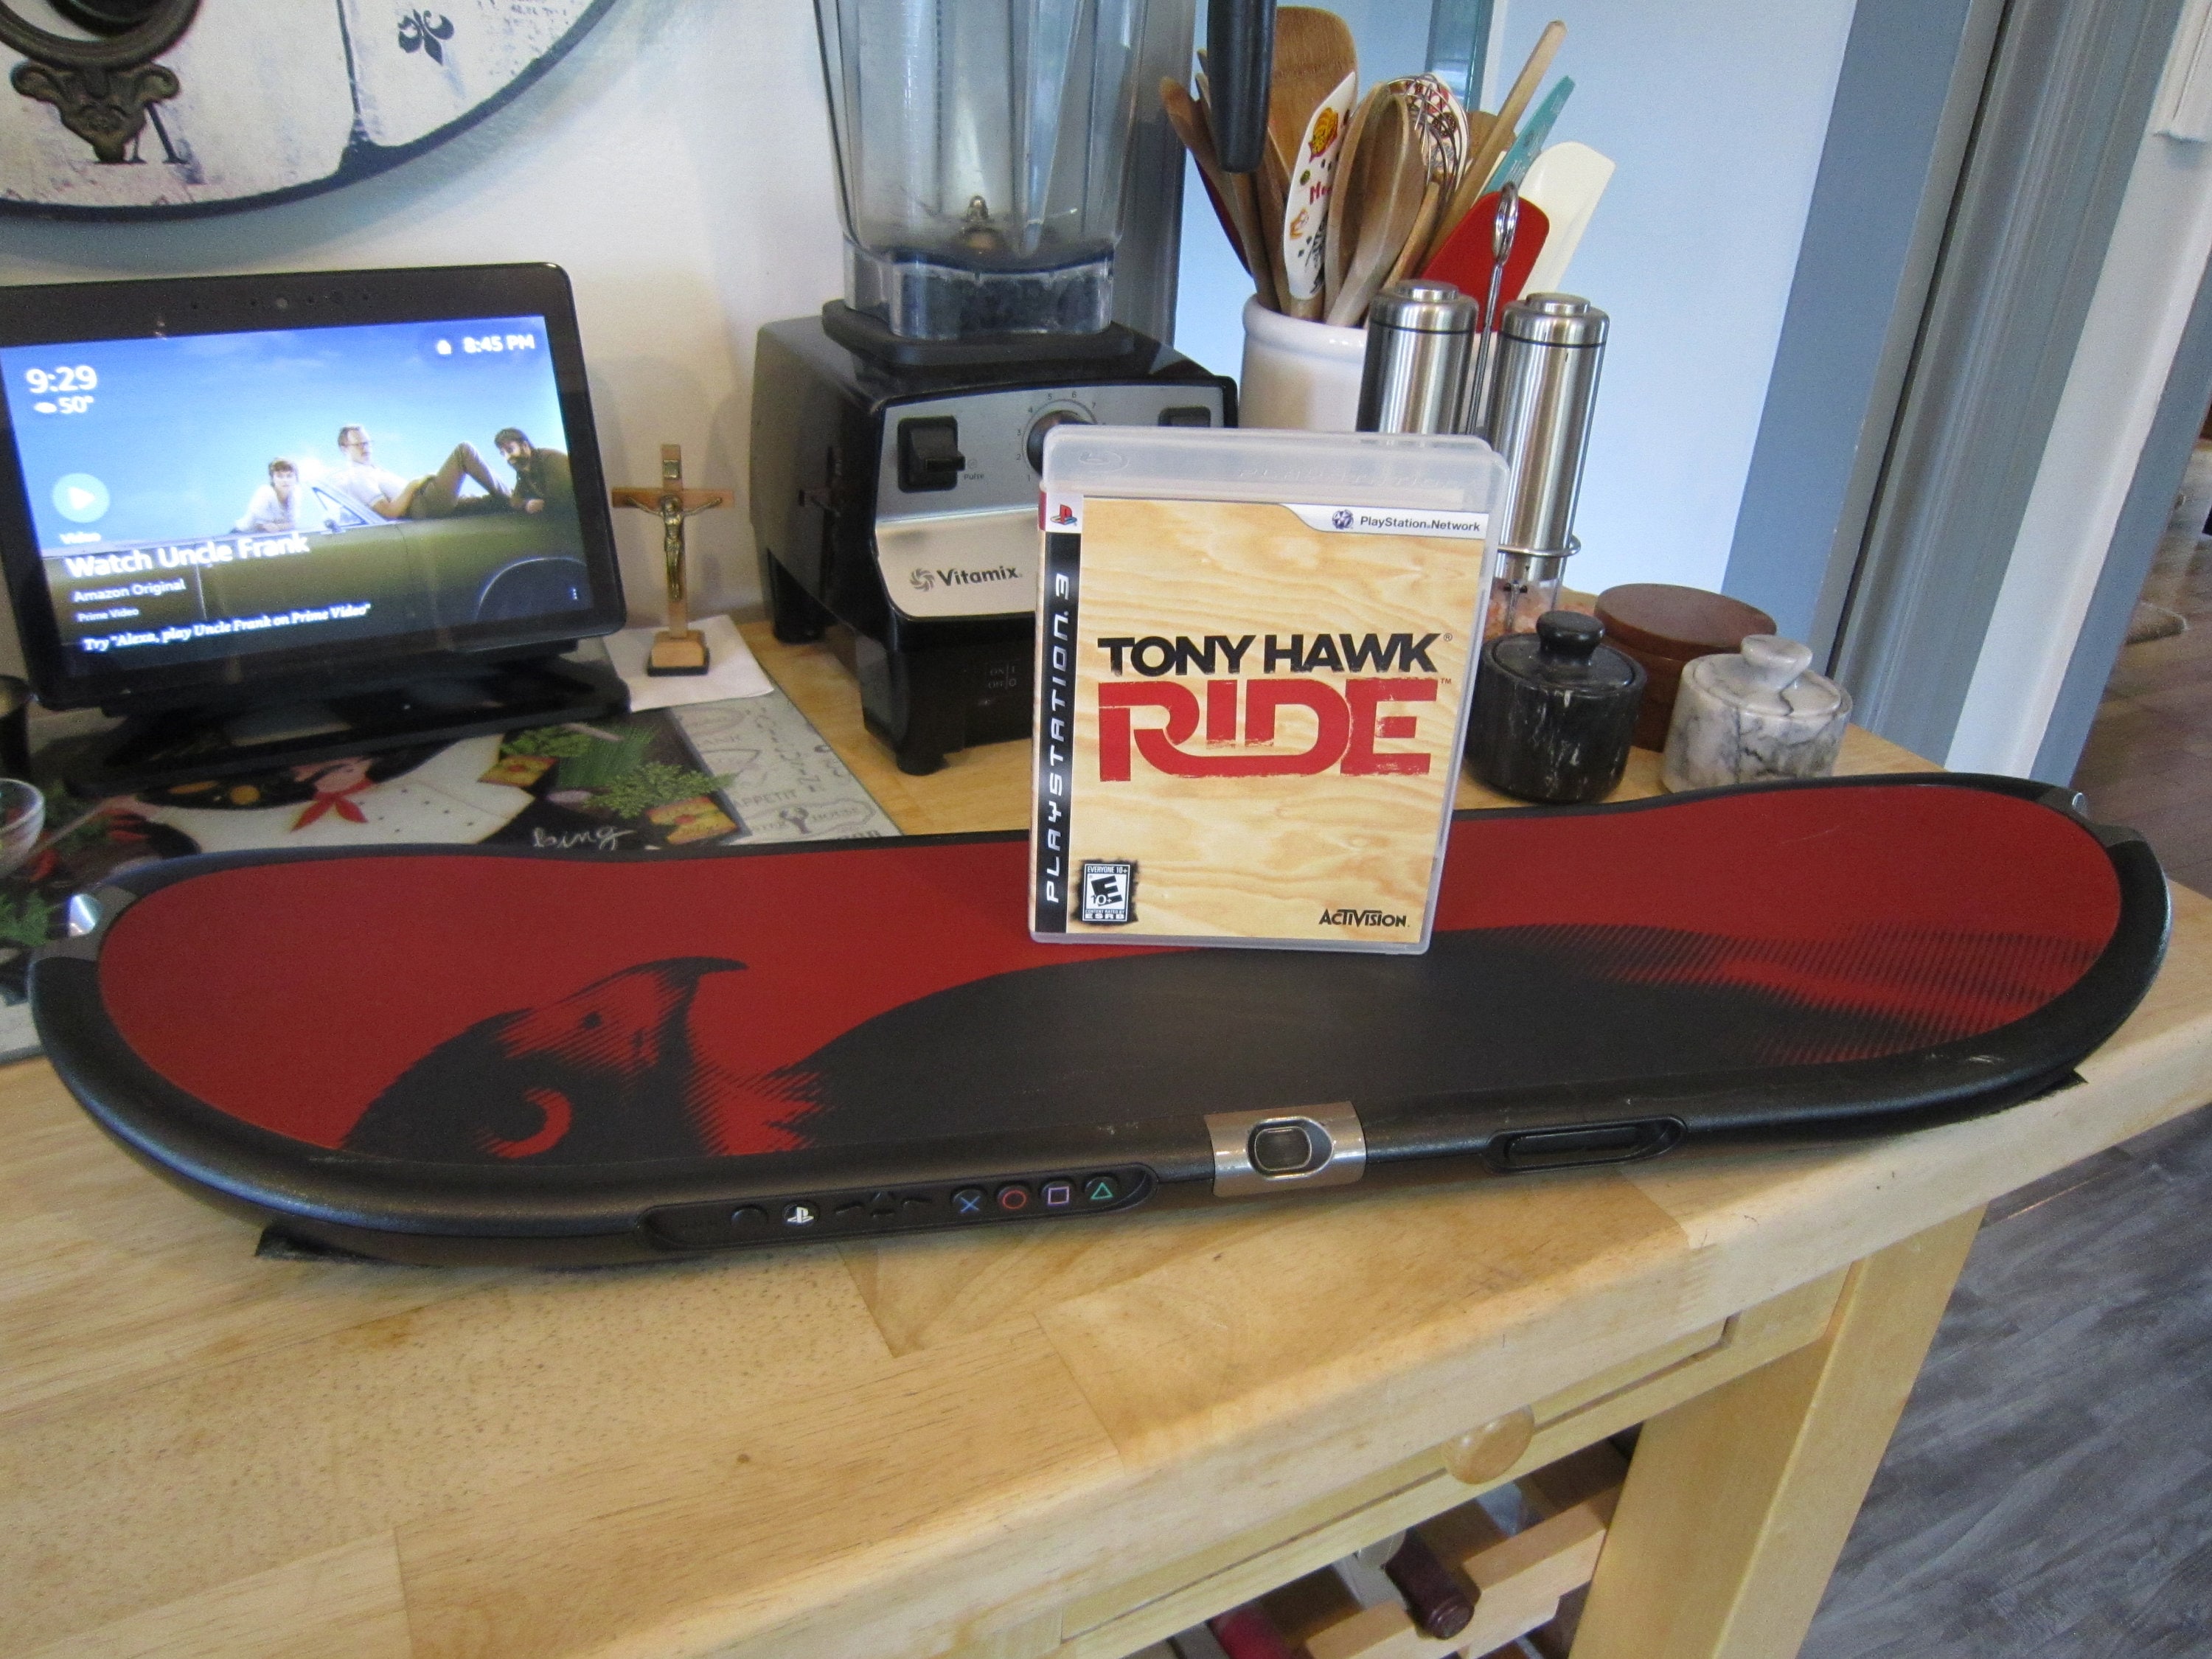 Wireless Tony Hawk Skateboard Ride Board for Xbox 360 With Tony Hawk Ride  Game